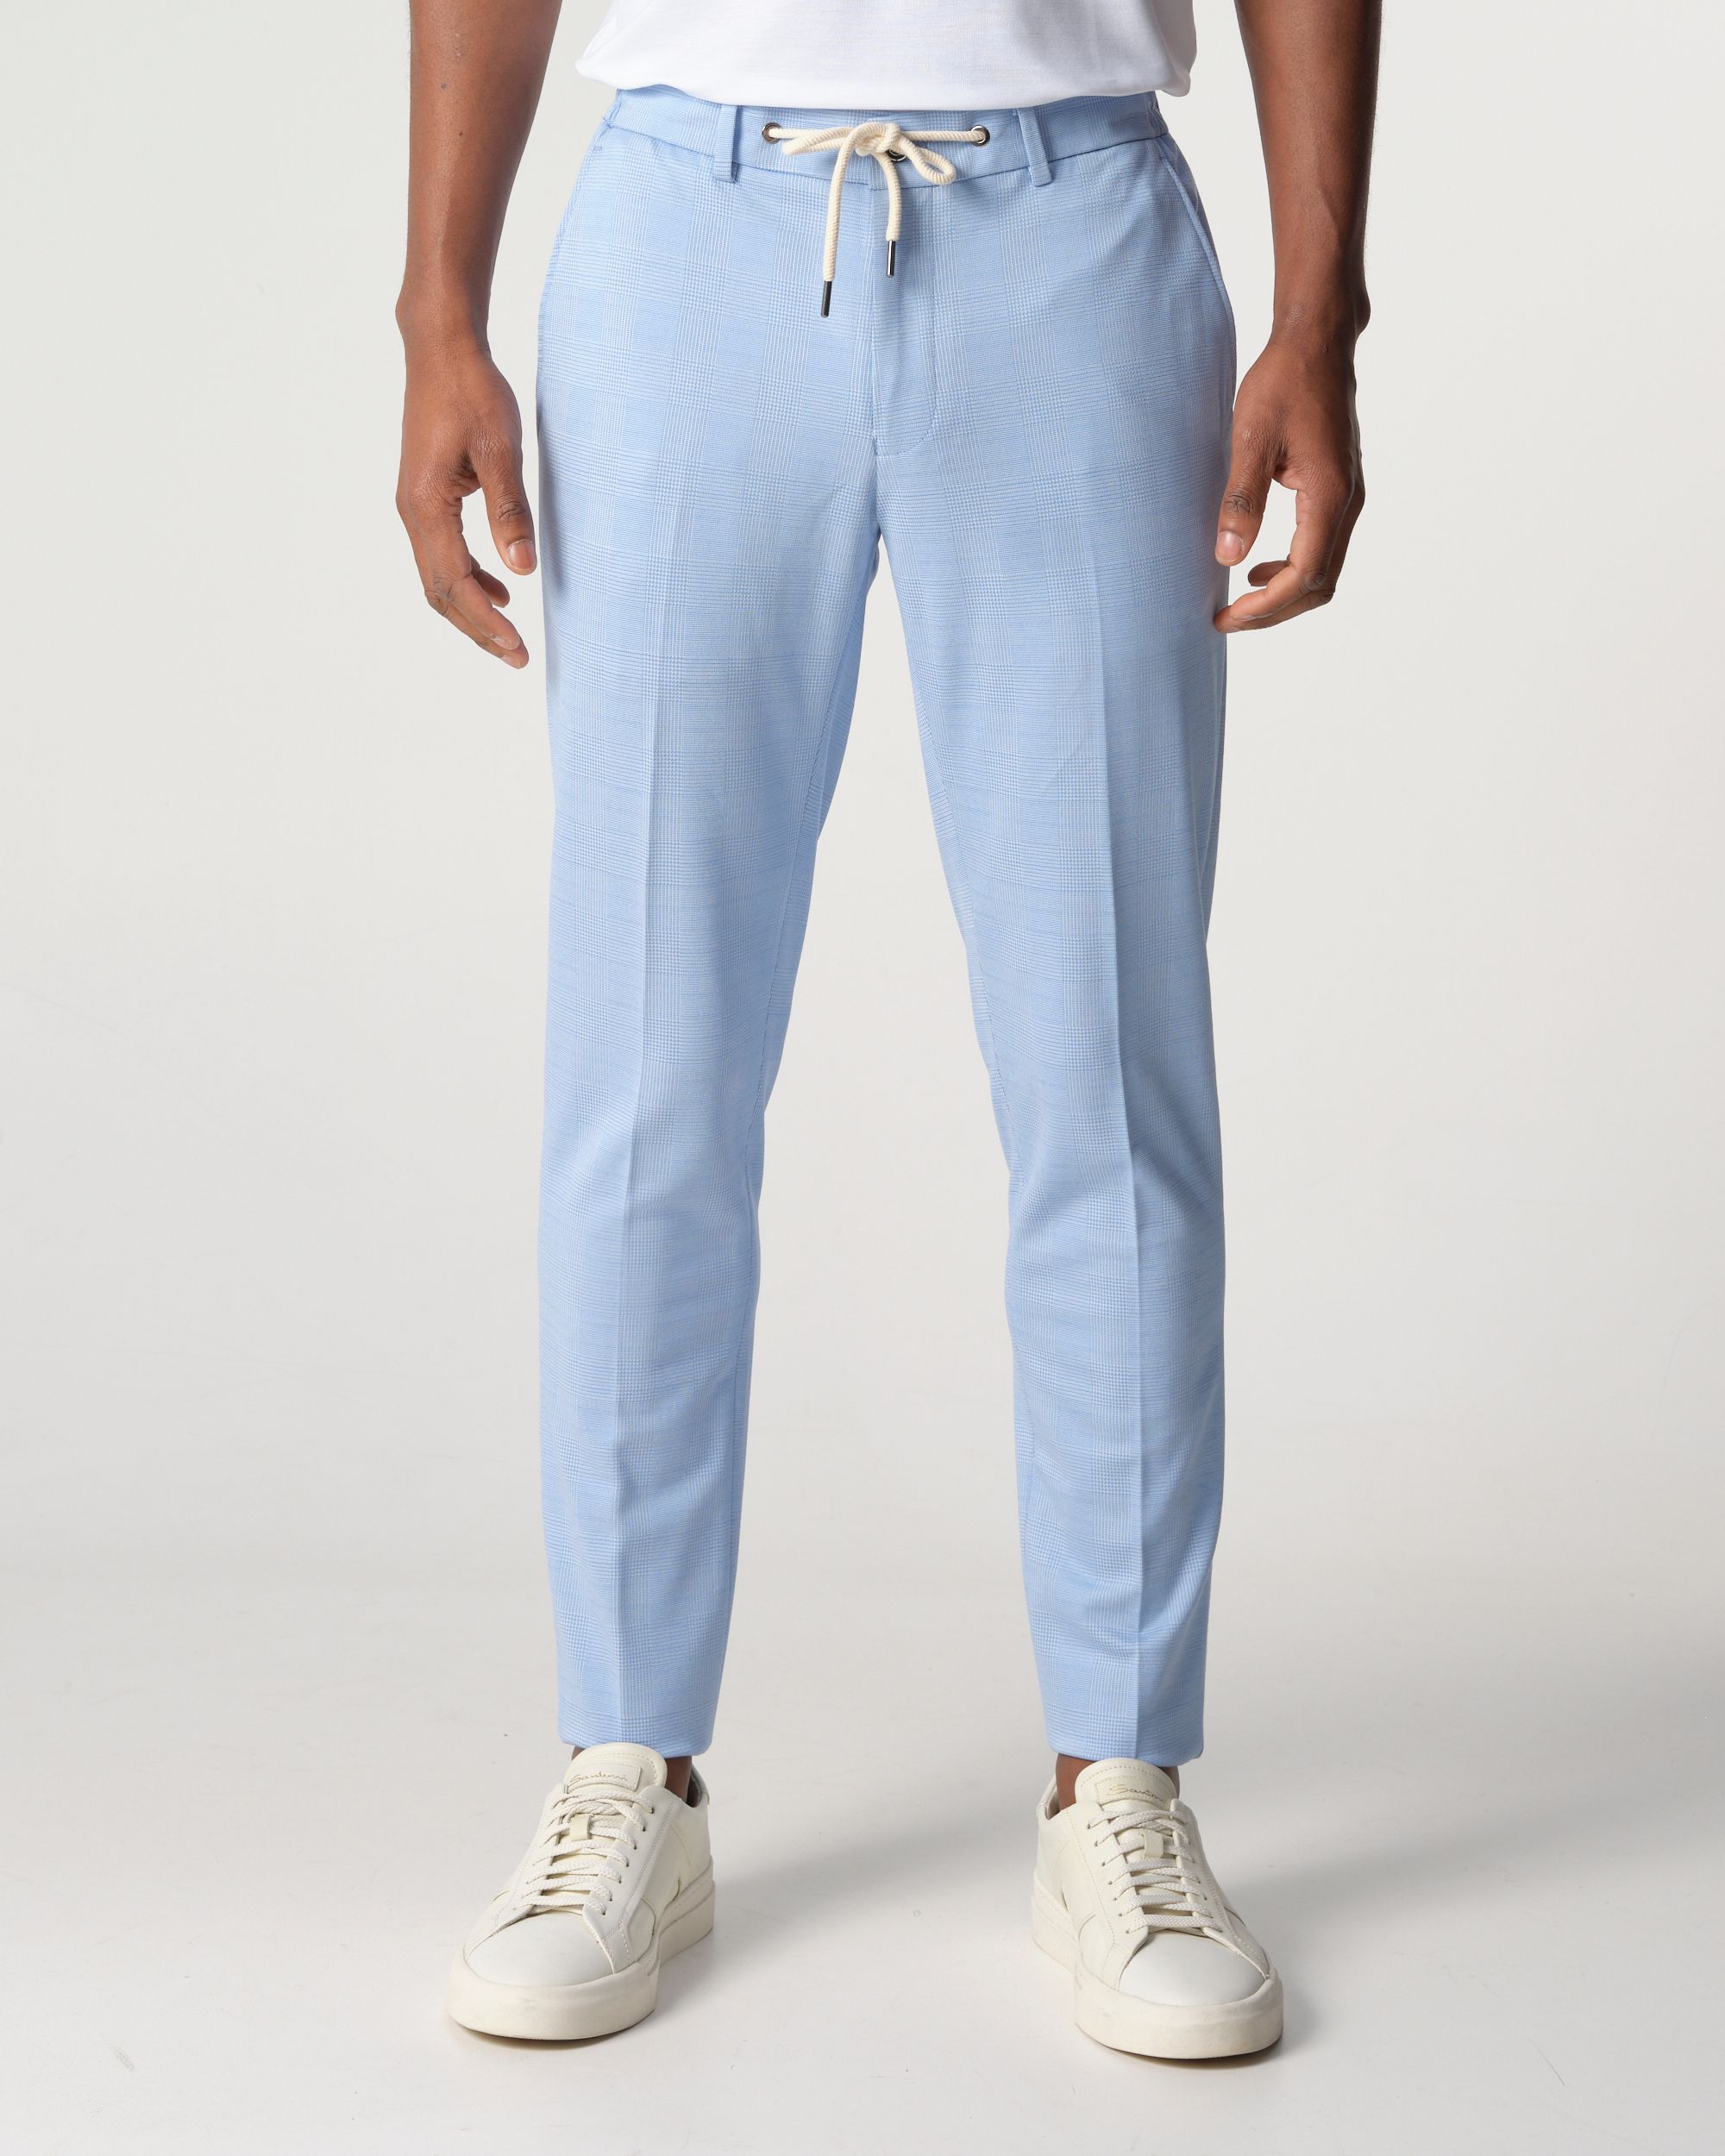 The BLUEPRINT Premium - Pantalon L.blauw grote ruit 084020-002-50